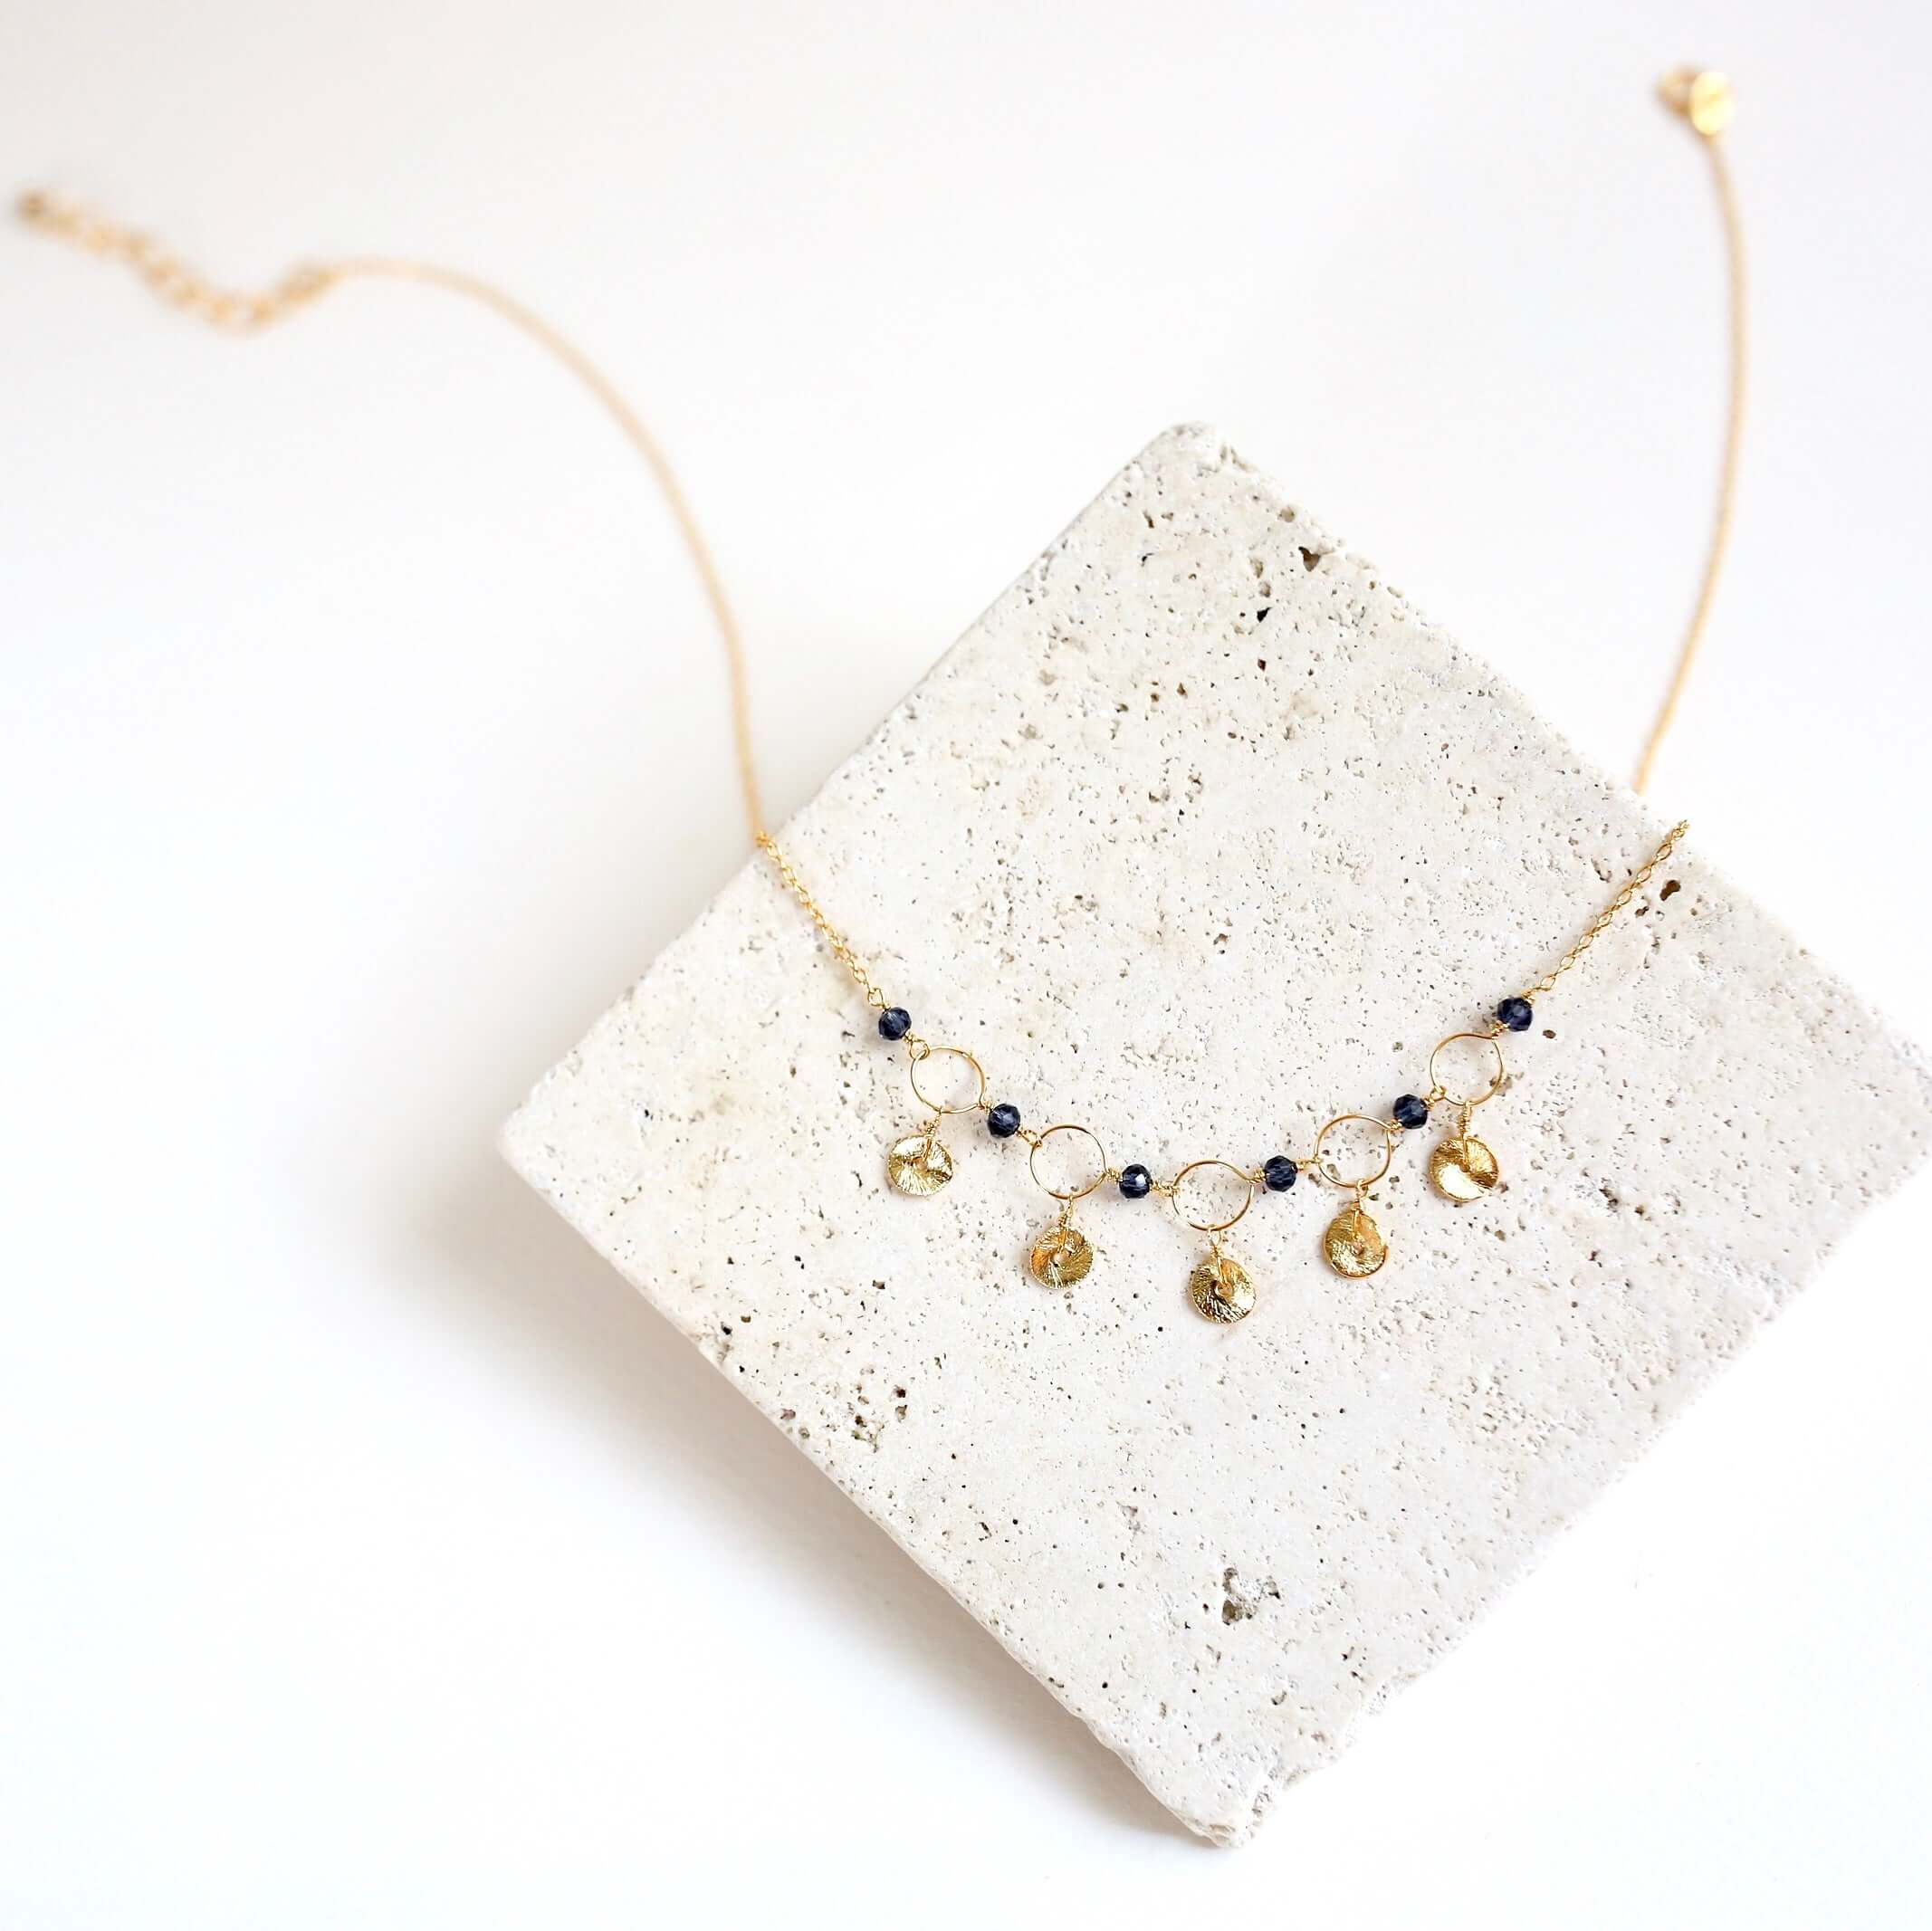 Handmade gemstone chain with Black Spinel gemstones Gold Necklace